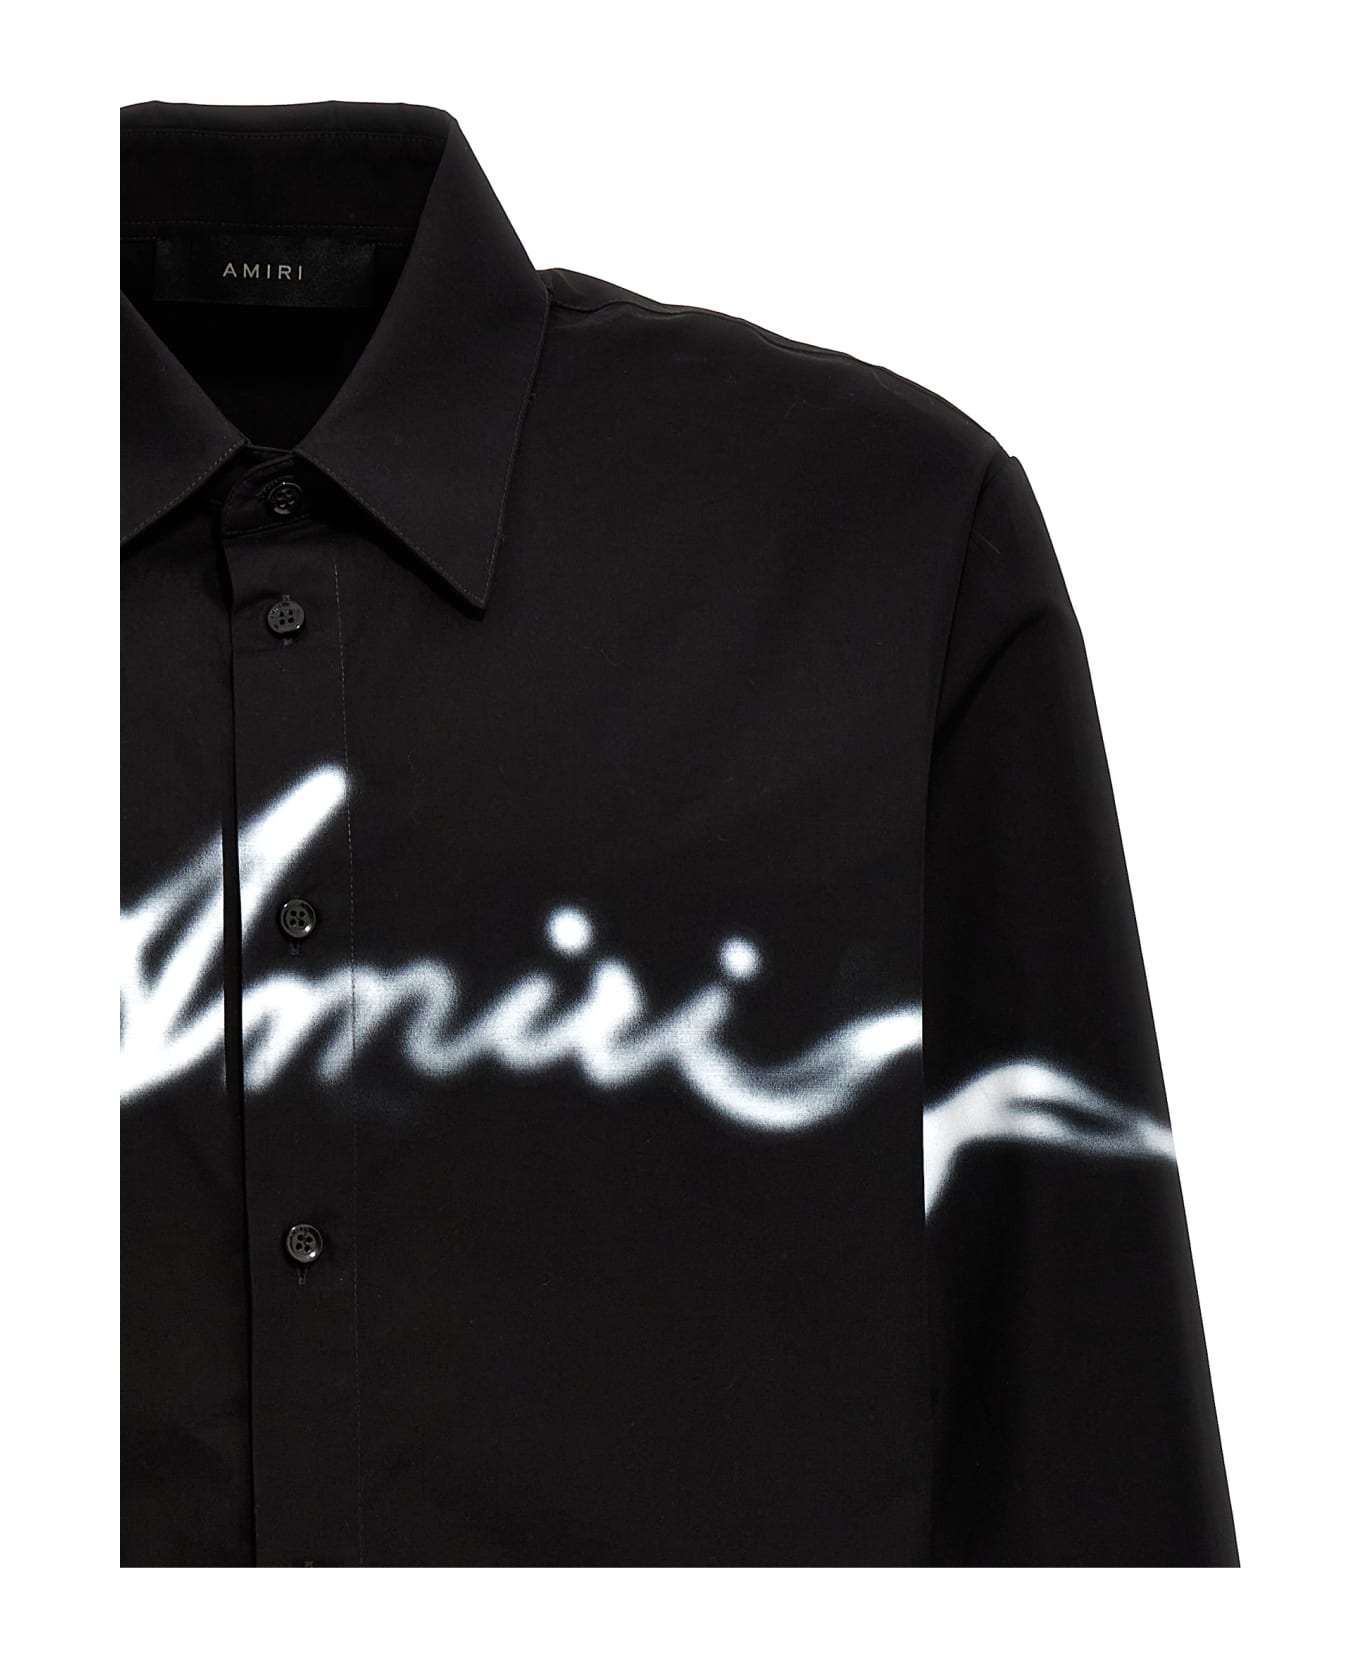 AMIRI 'amiri Smoke' Shirt - White/Black